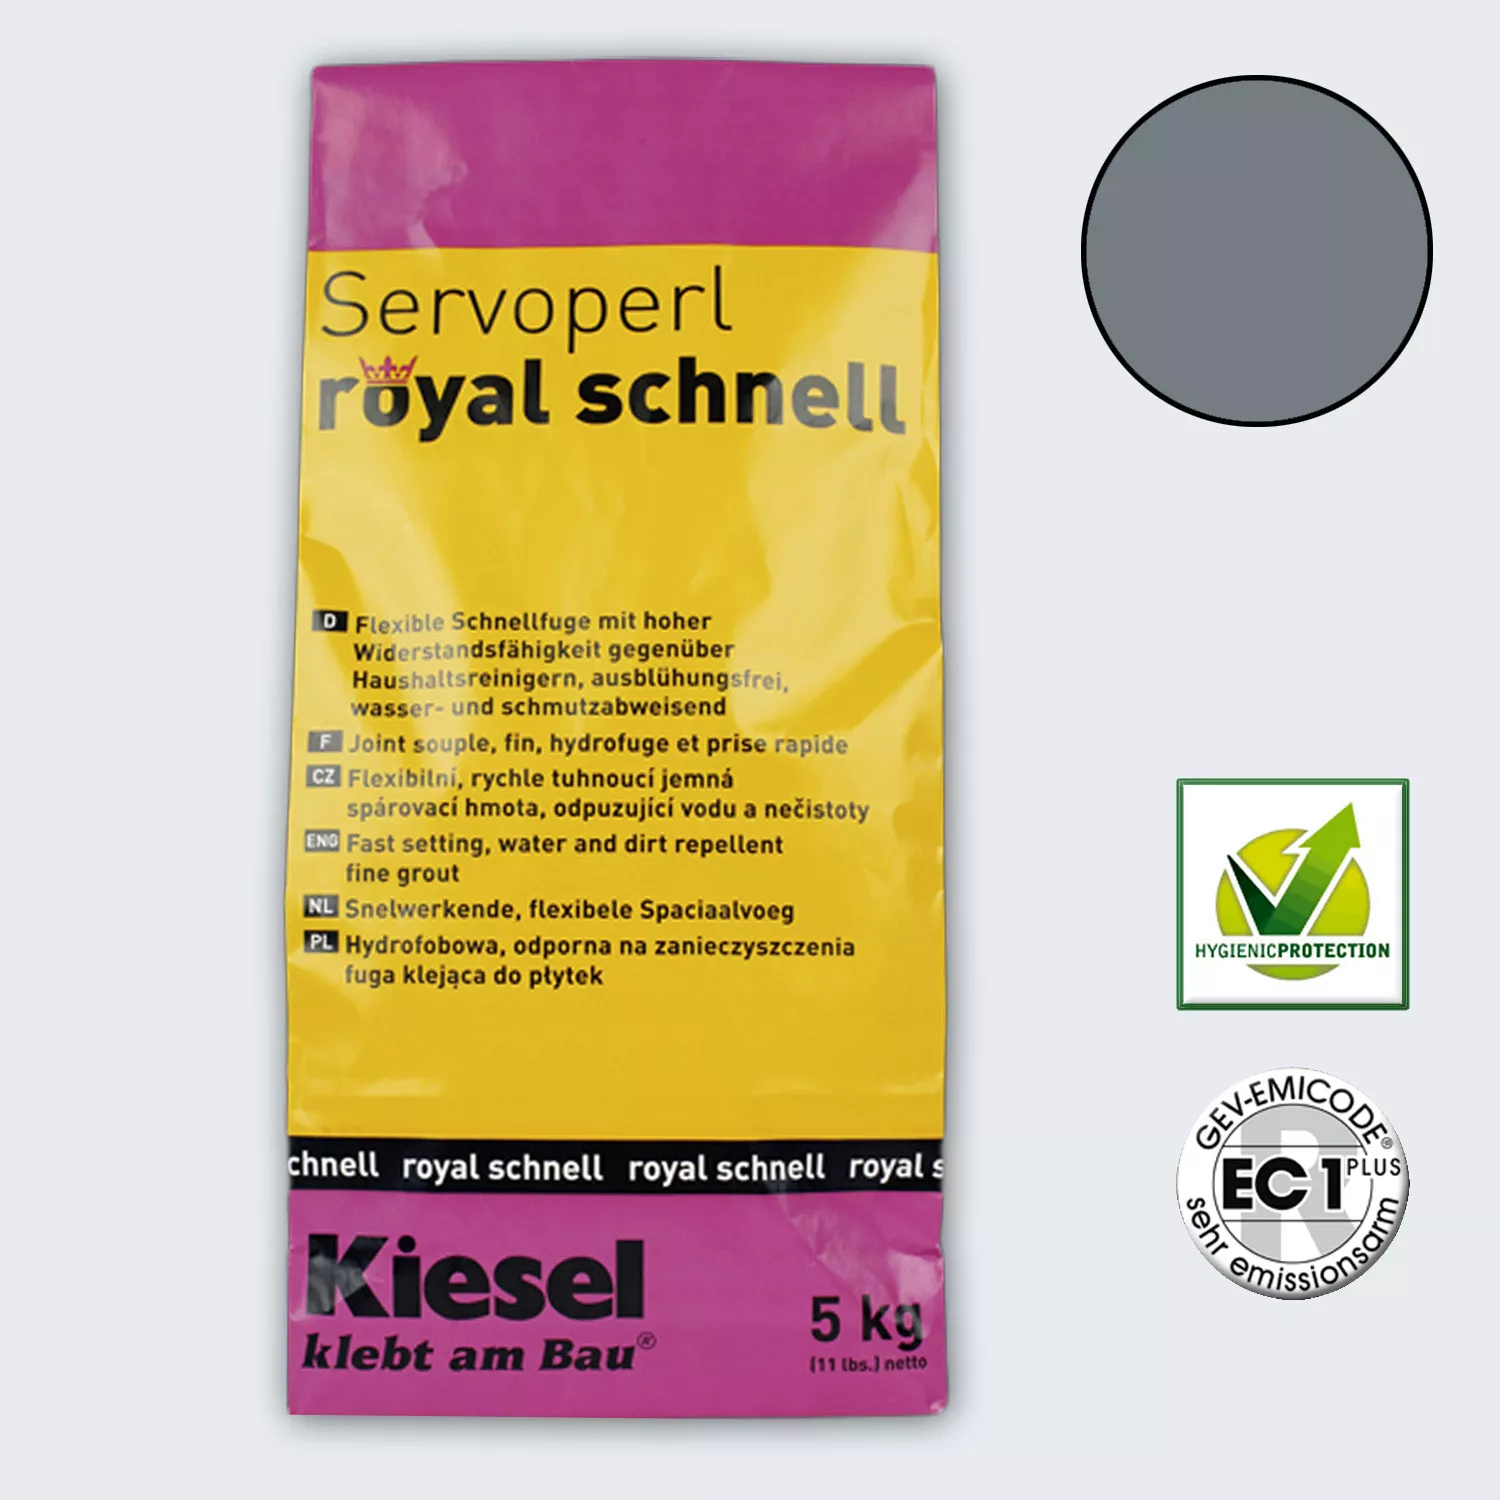 Kiesel Servoperl Royal - Γρήγορη σκλήρυνση, εύκαμπτος σύνδεσμος (5KG βασάλτης)